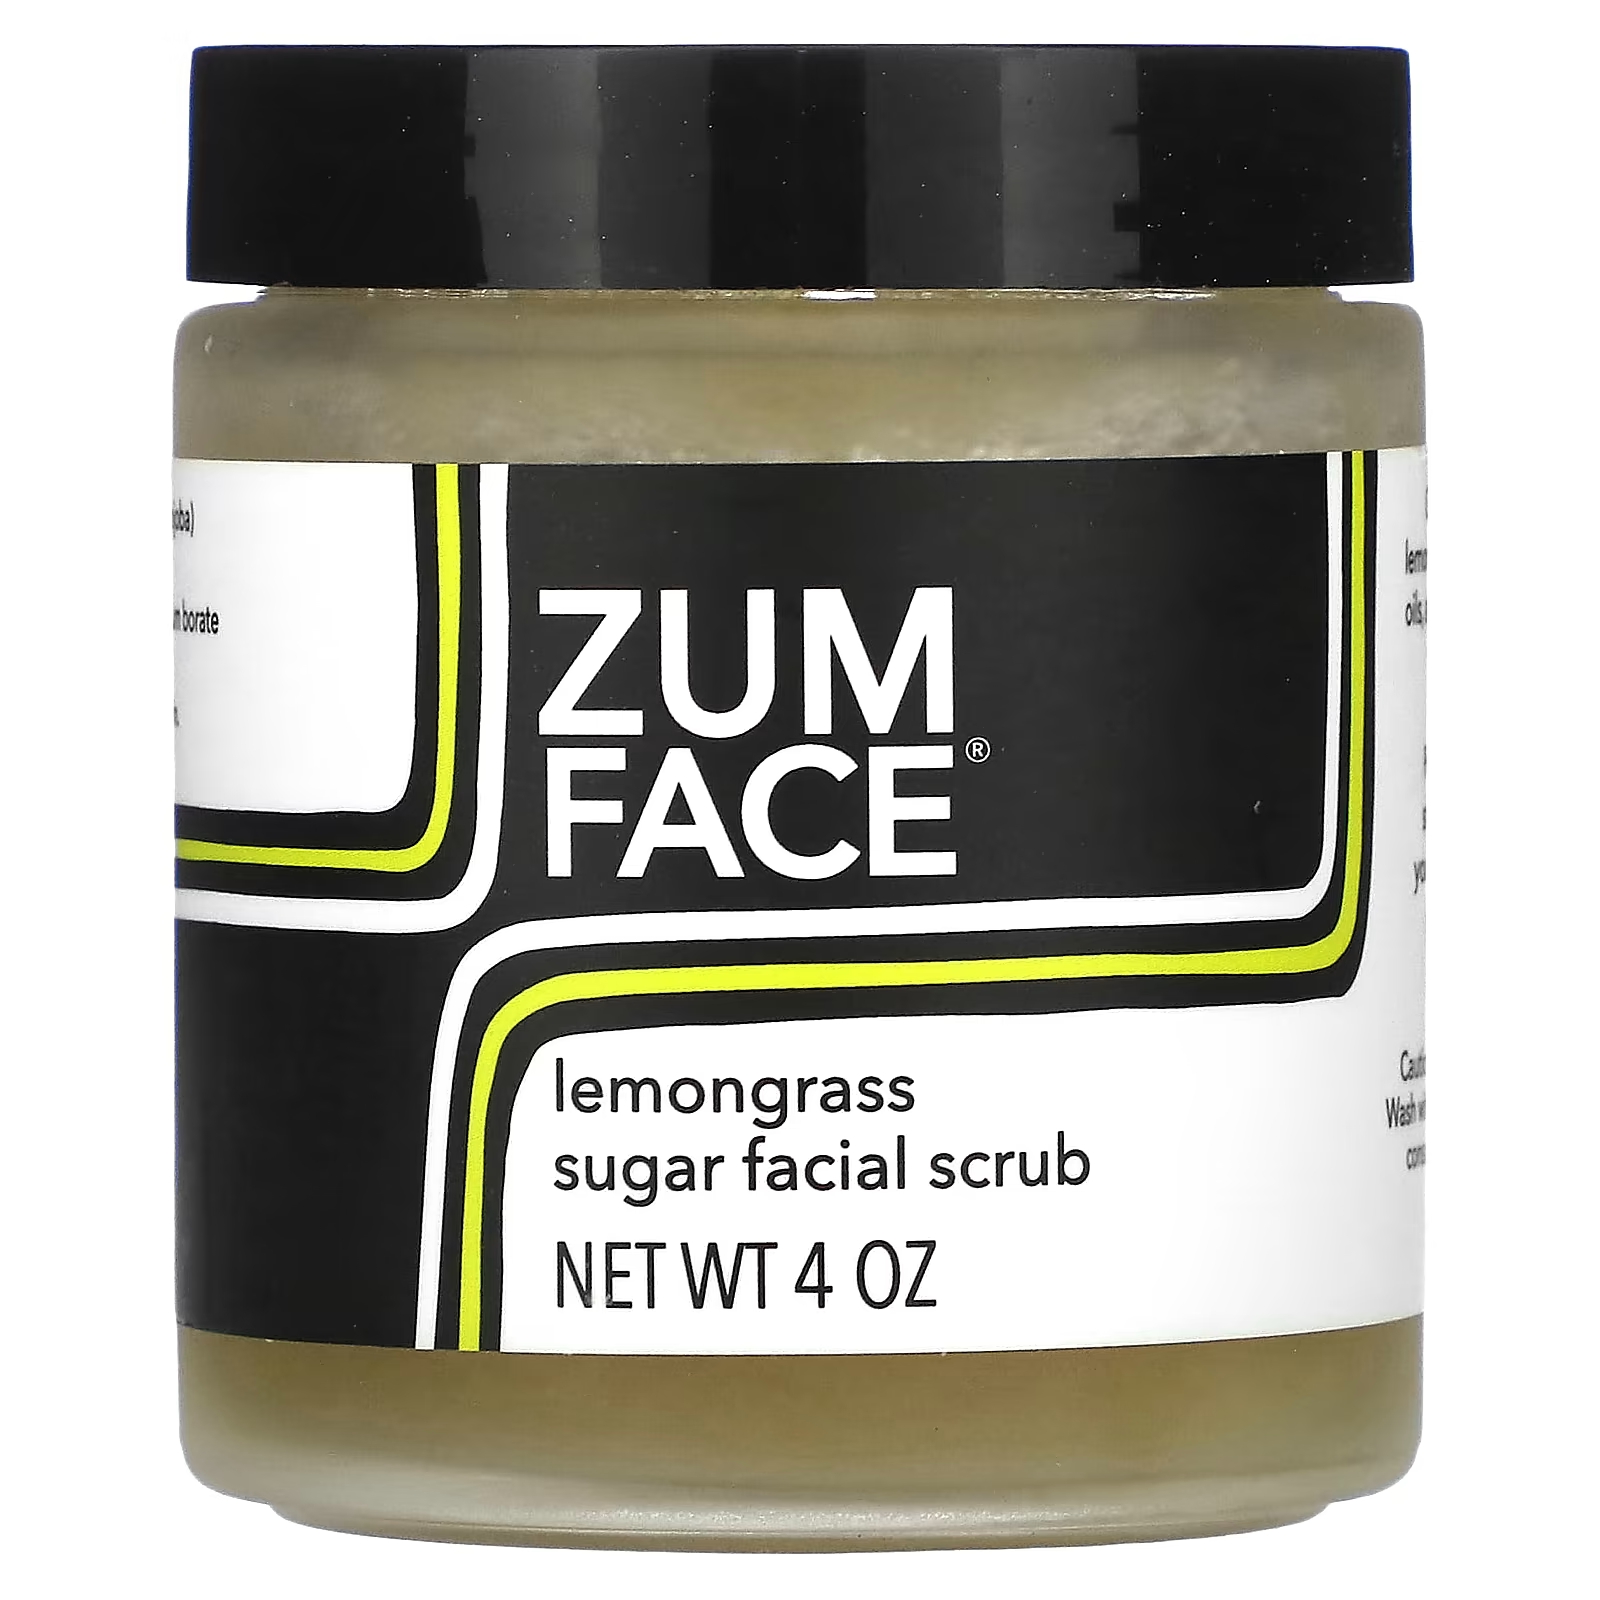 Скраб ZUM Zum Face сахарный для лица лемонграсс zum zum face сахарный скраб для лица лемонграсс 4 унции